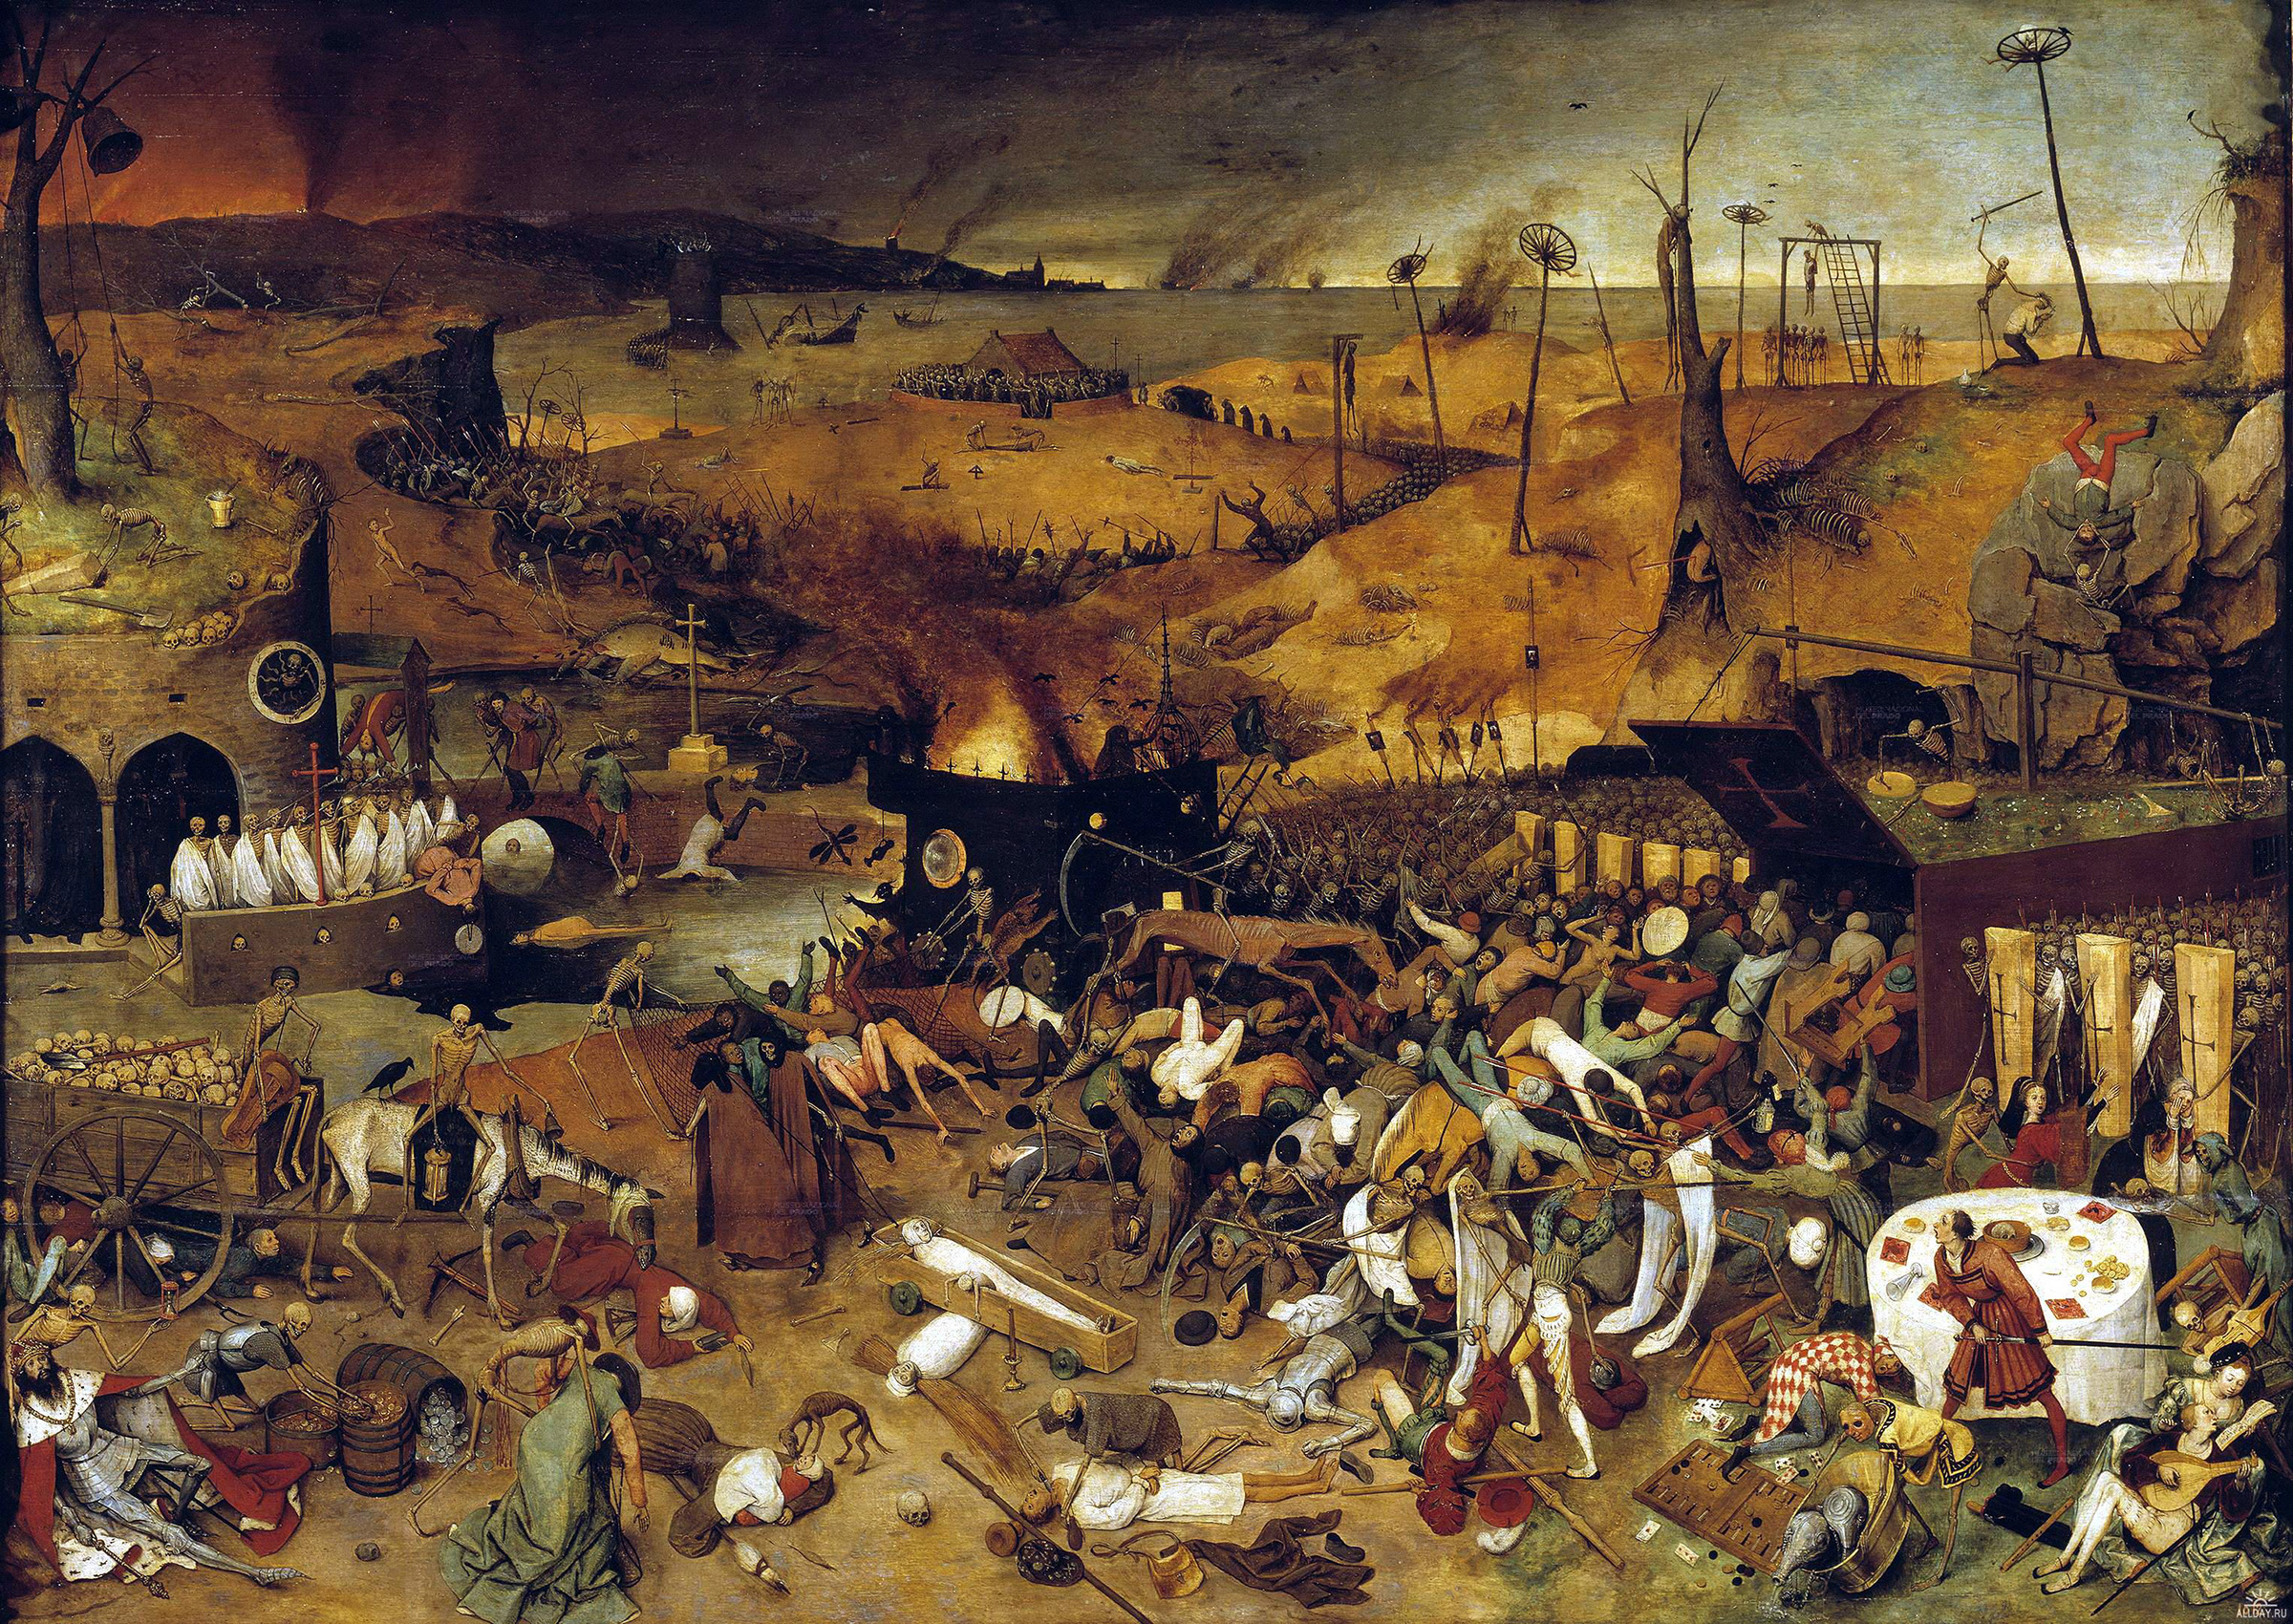 The Black Death by Pieter Bruegel the Elder